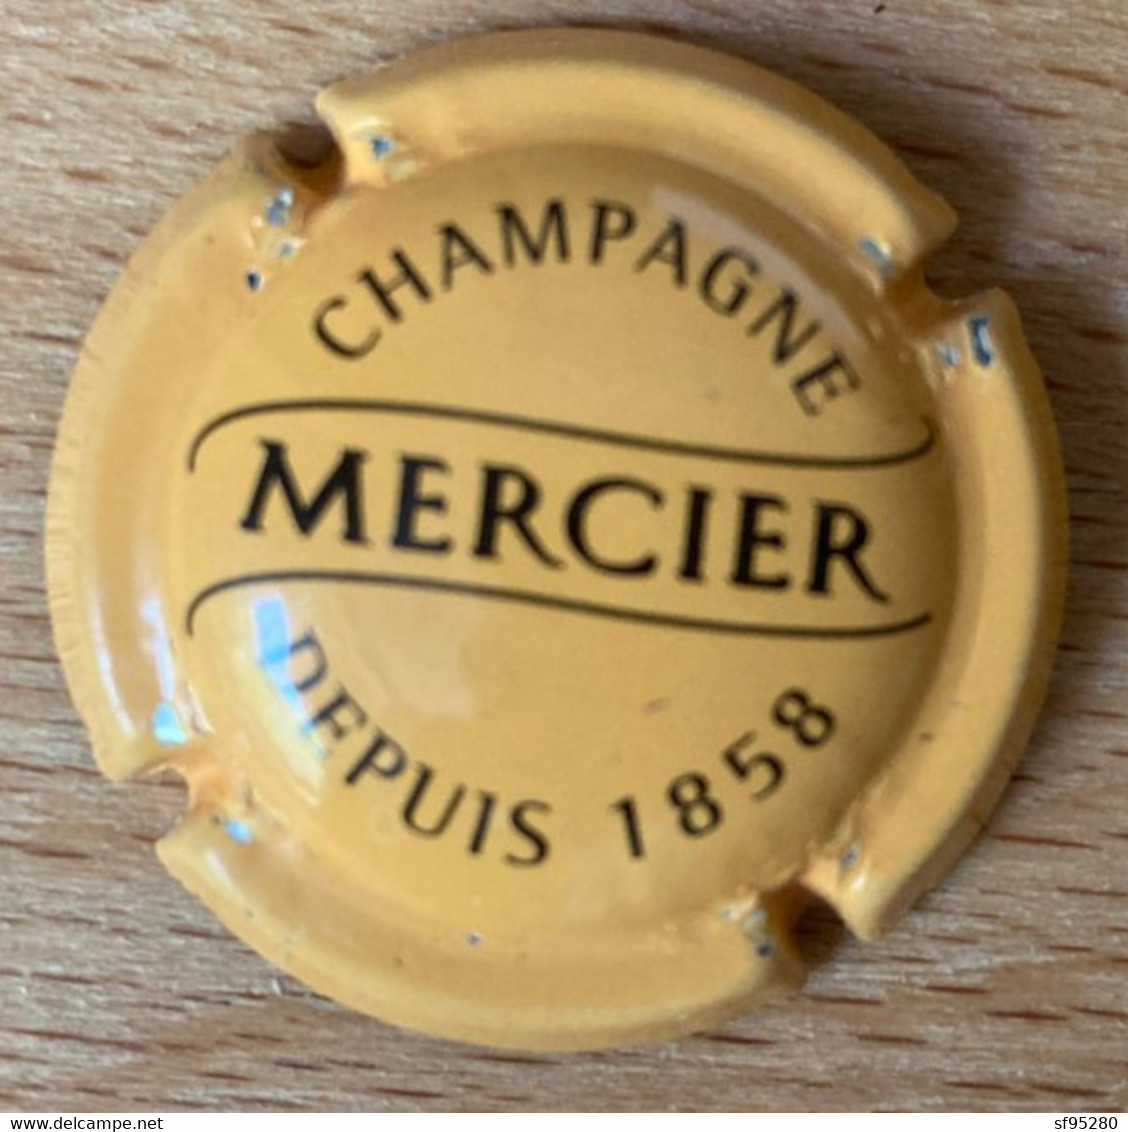 CHAMPAGNE MERCIER - Mercier